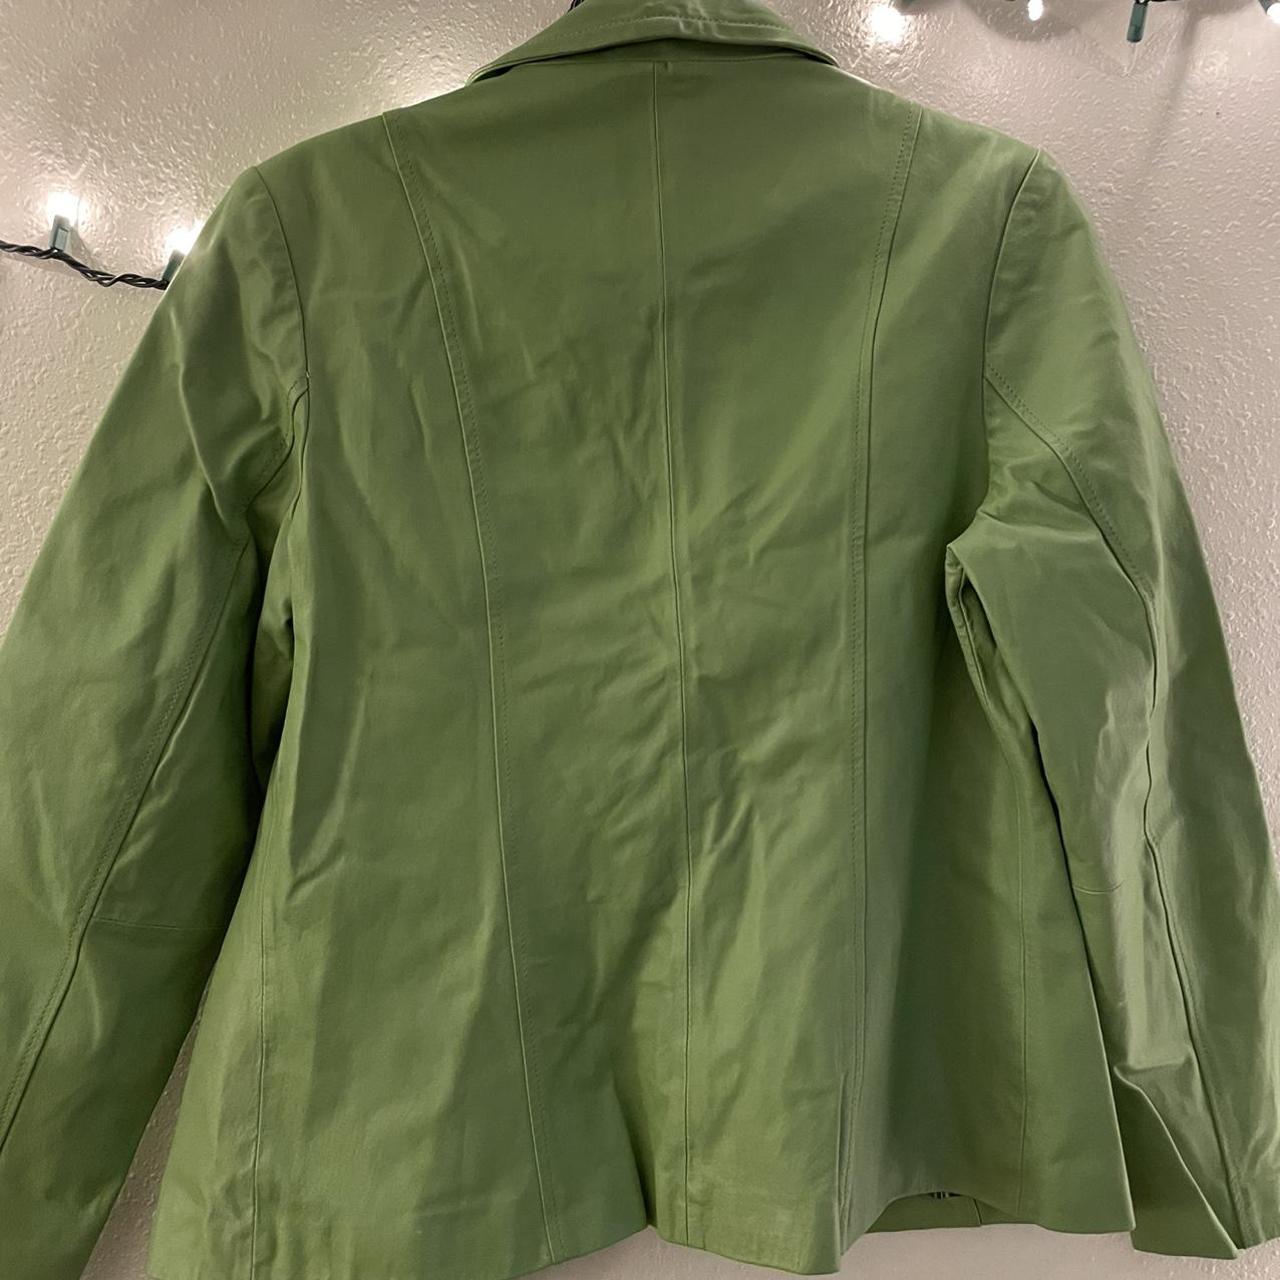 Dialogue lime green leather jacket 🧥🔥 — Dialogue... - Depop